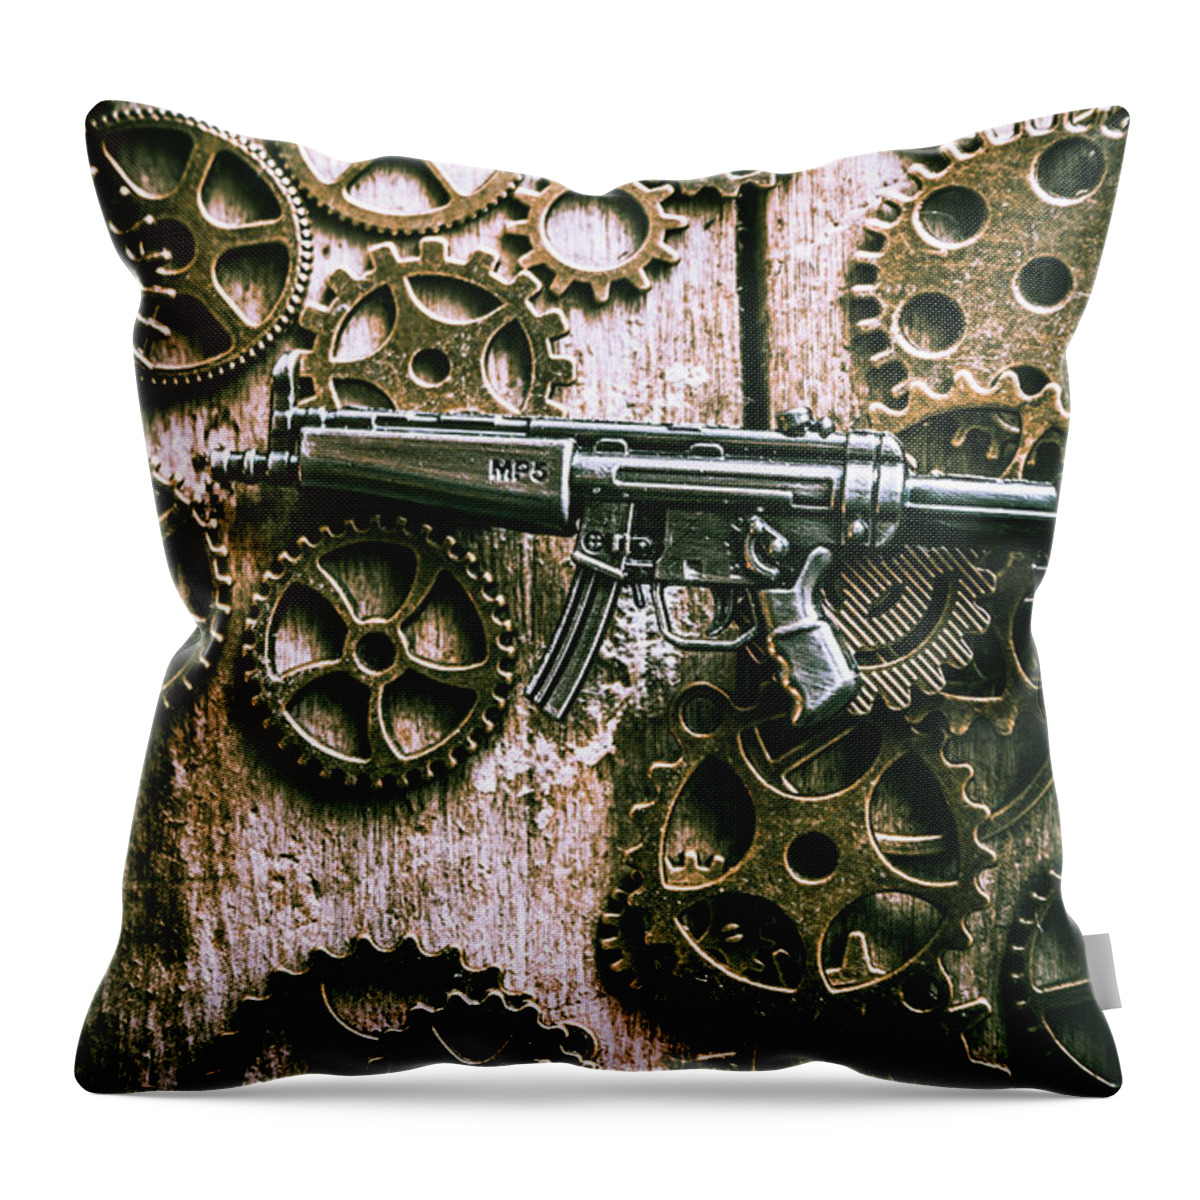 Mp5 Throw Pillow featuring the photograph Miniature MP5 submachine gun by Jorgo Photography